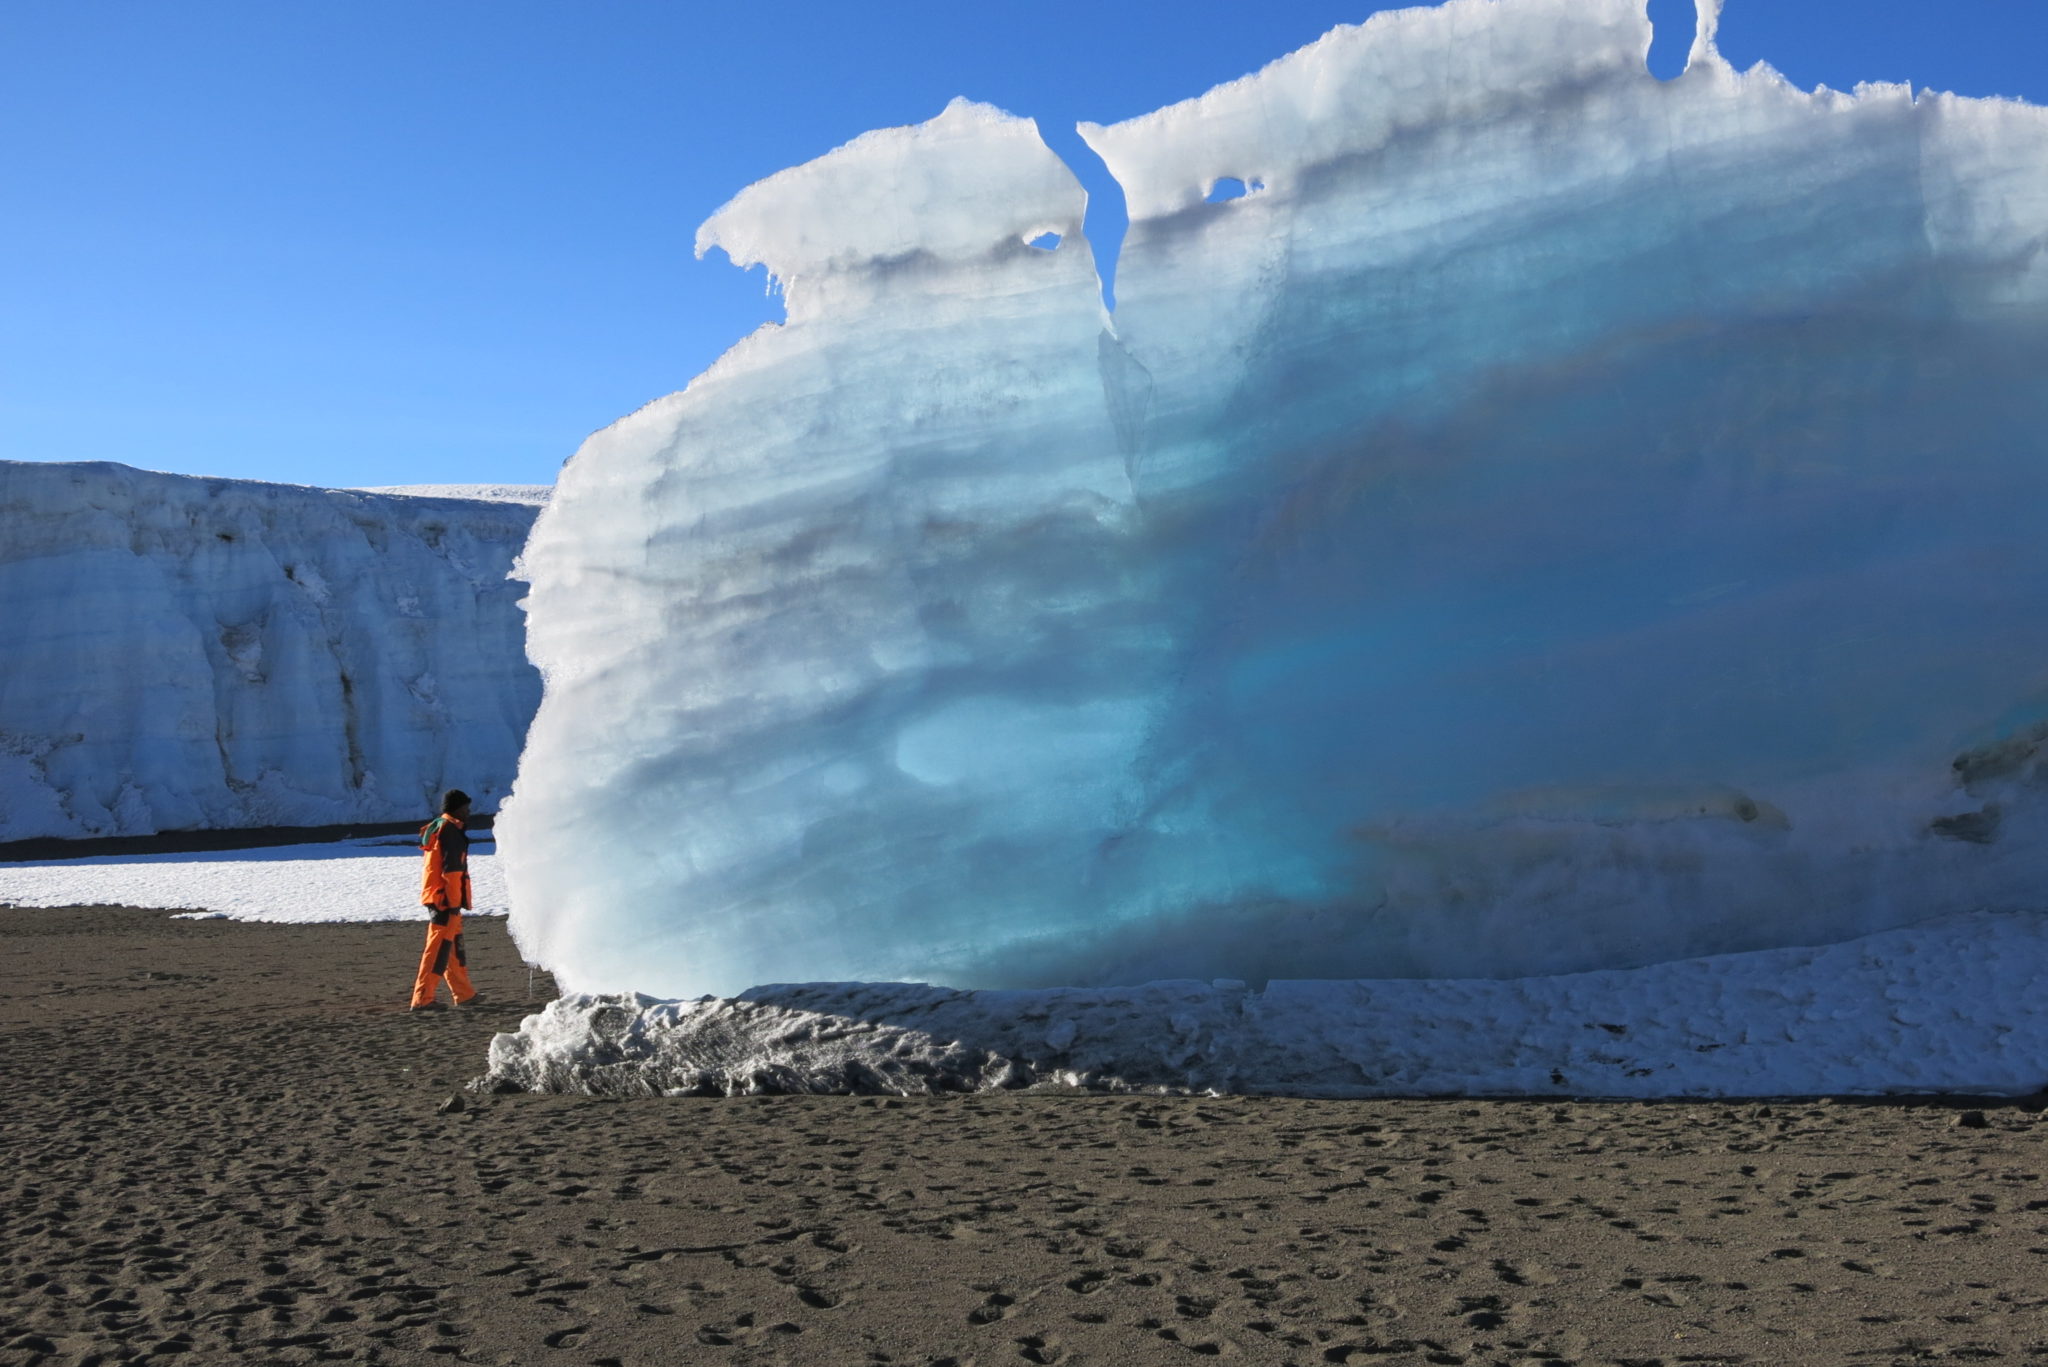 A porter stands near a large glacier